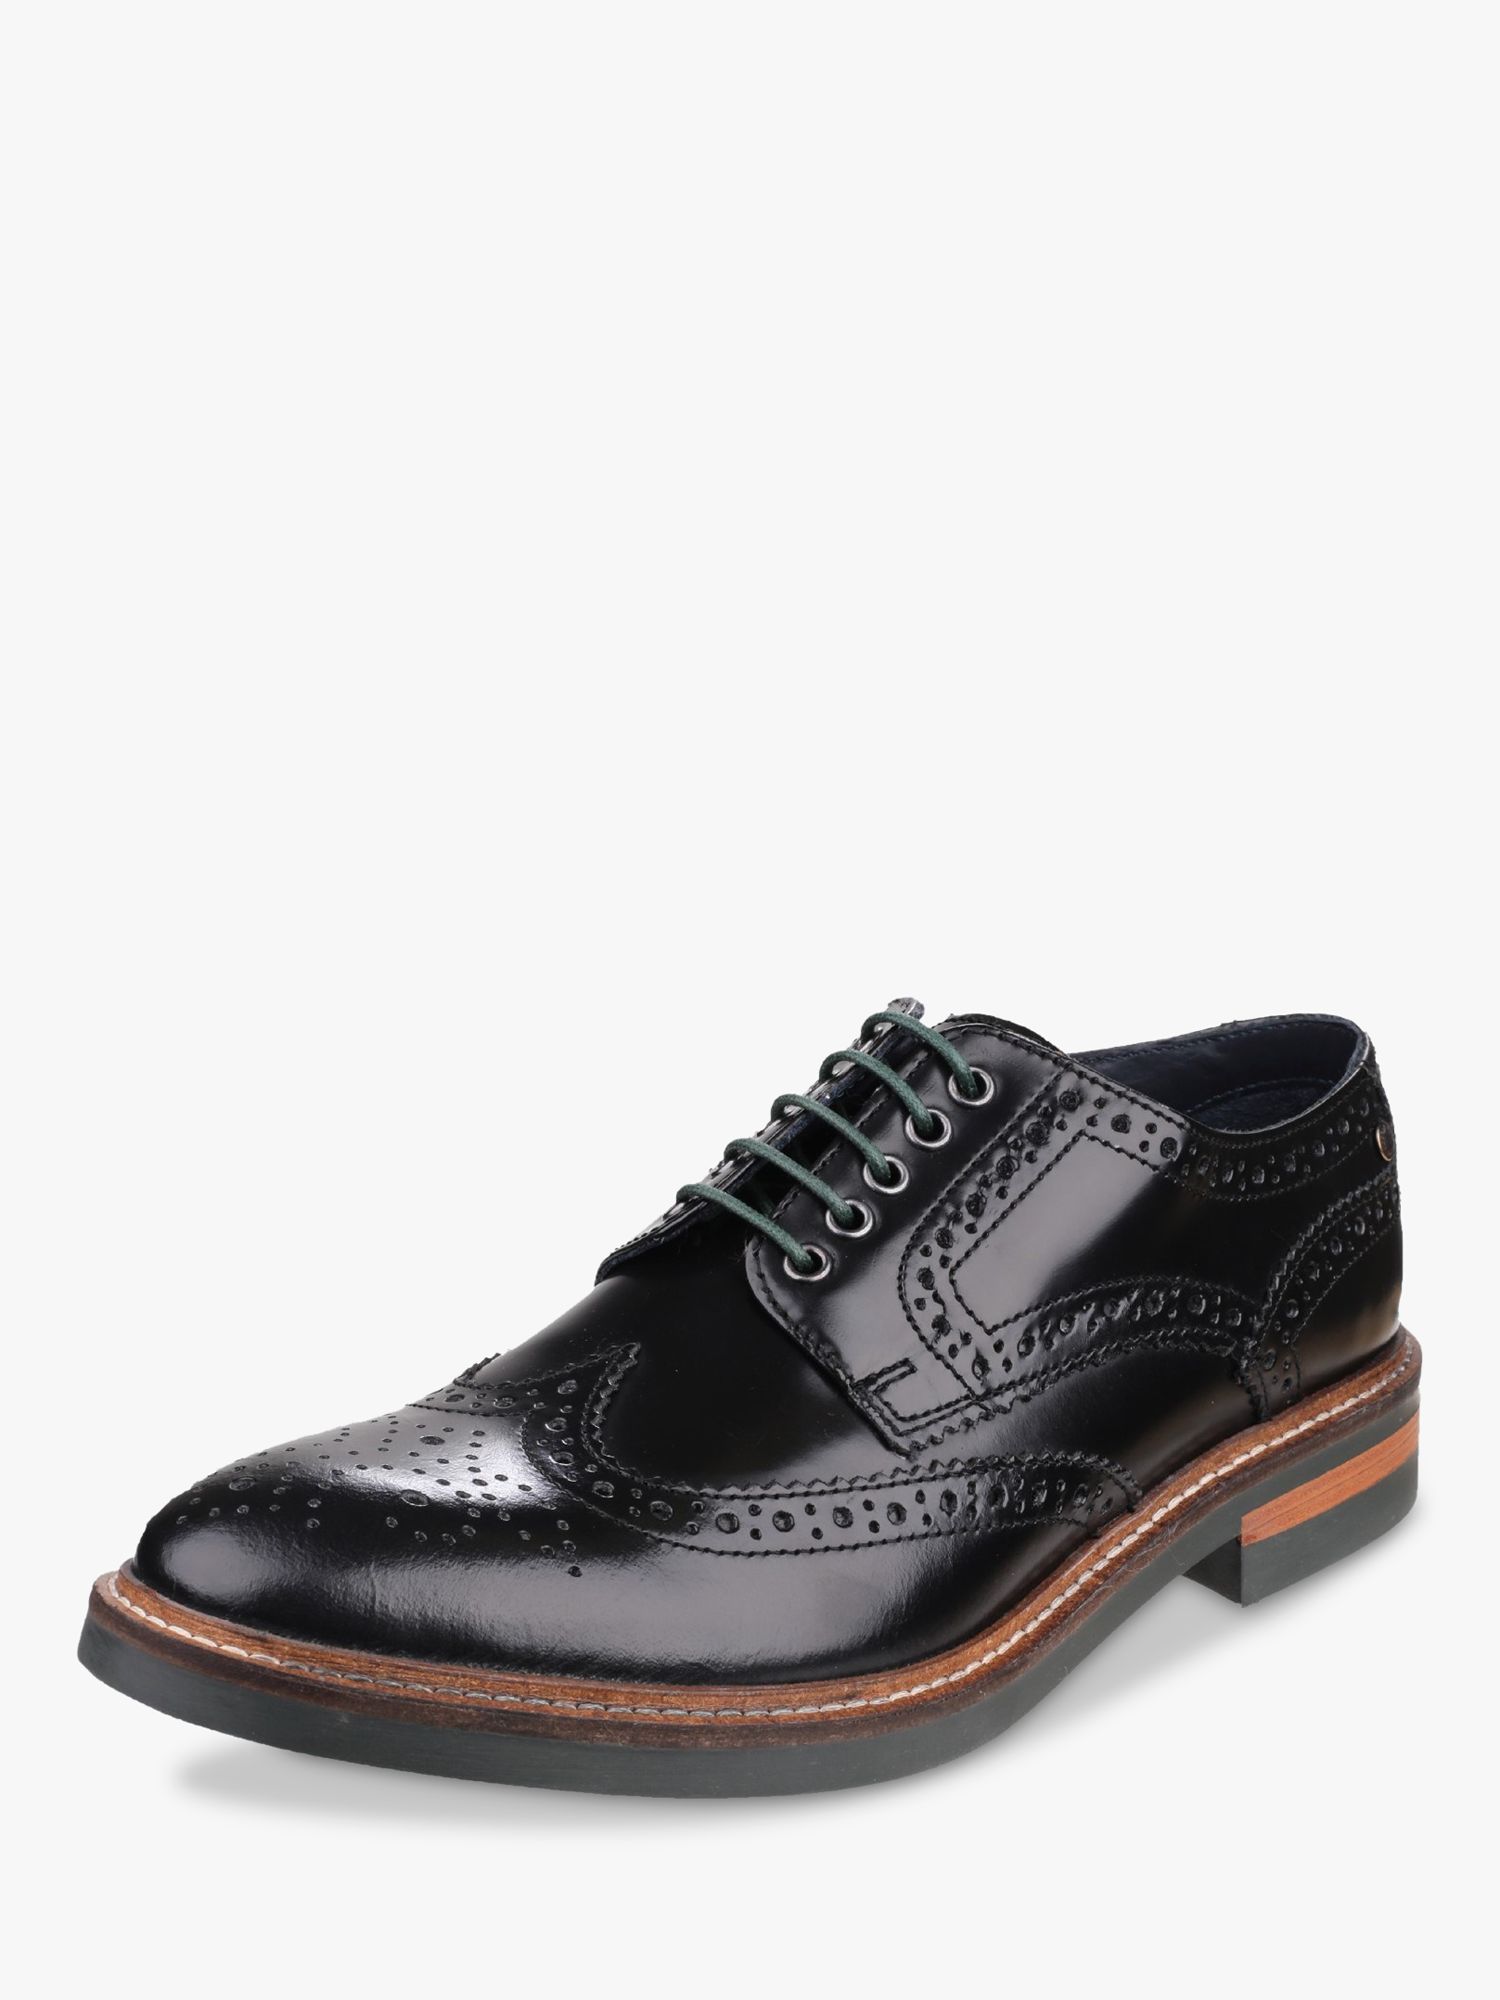 Base London Brogue Derby Shoes, Black, 6